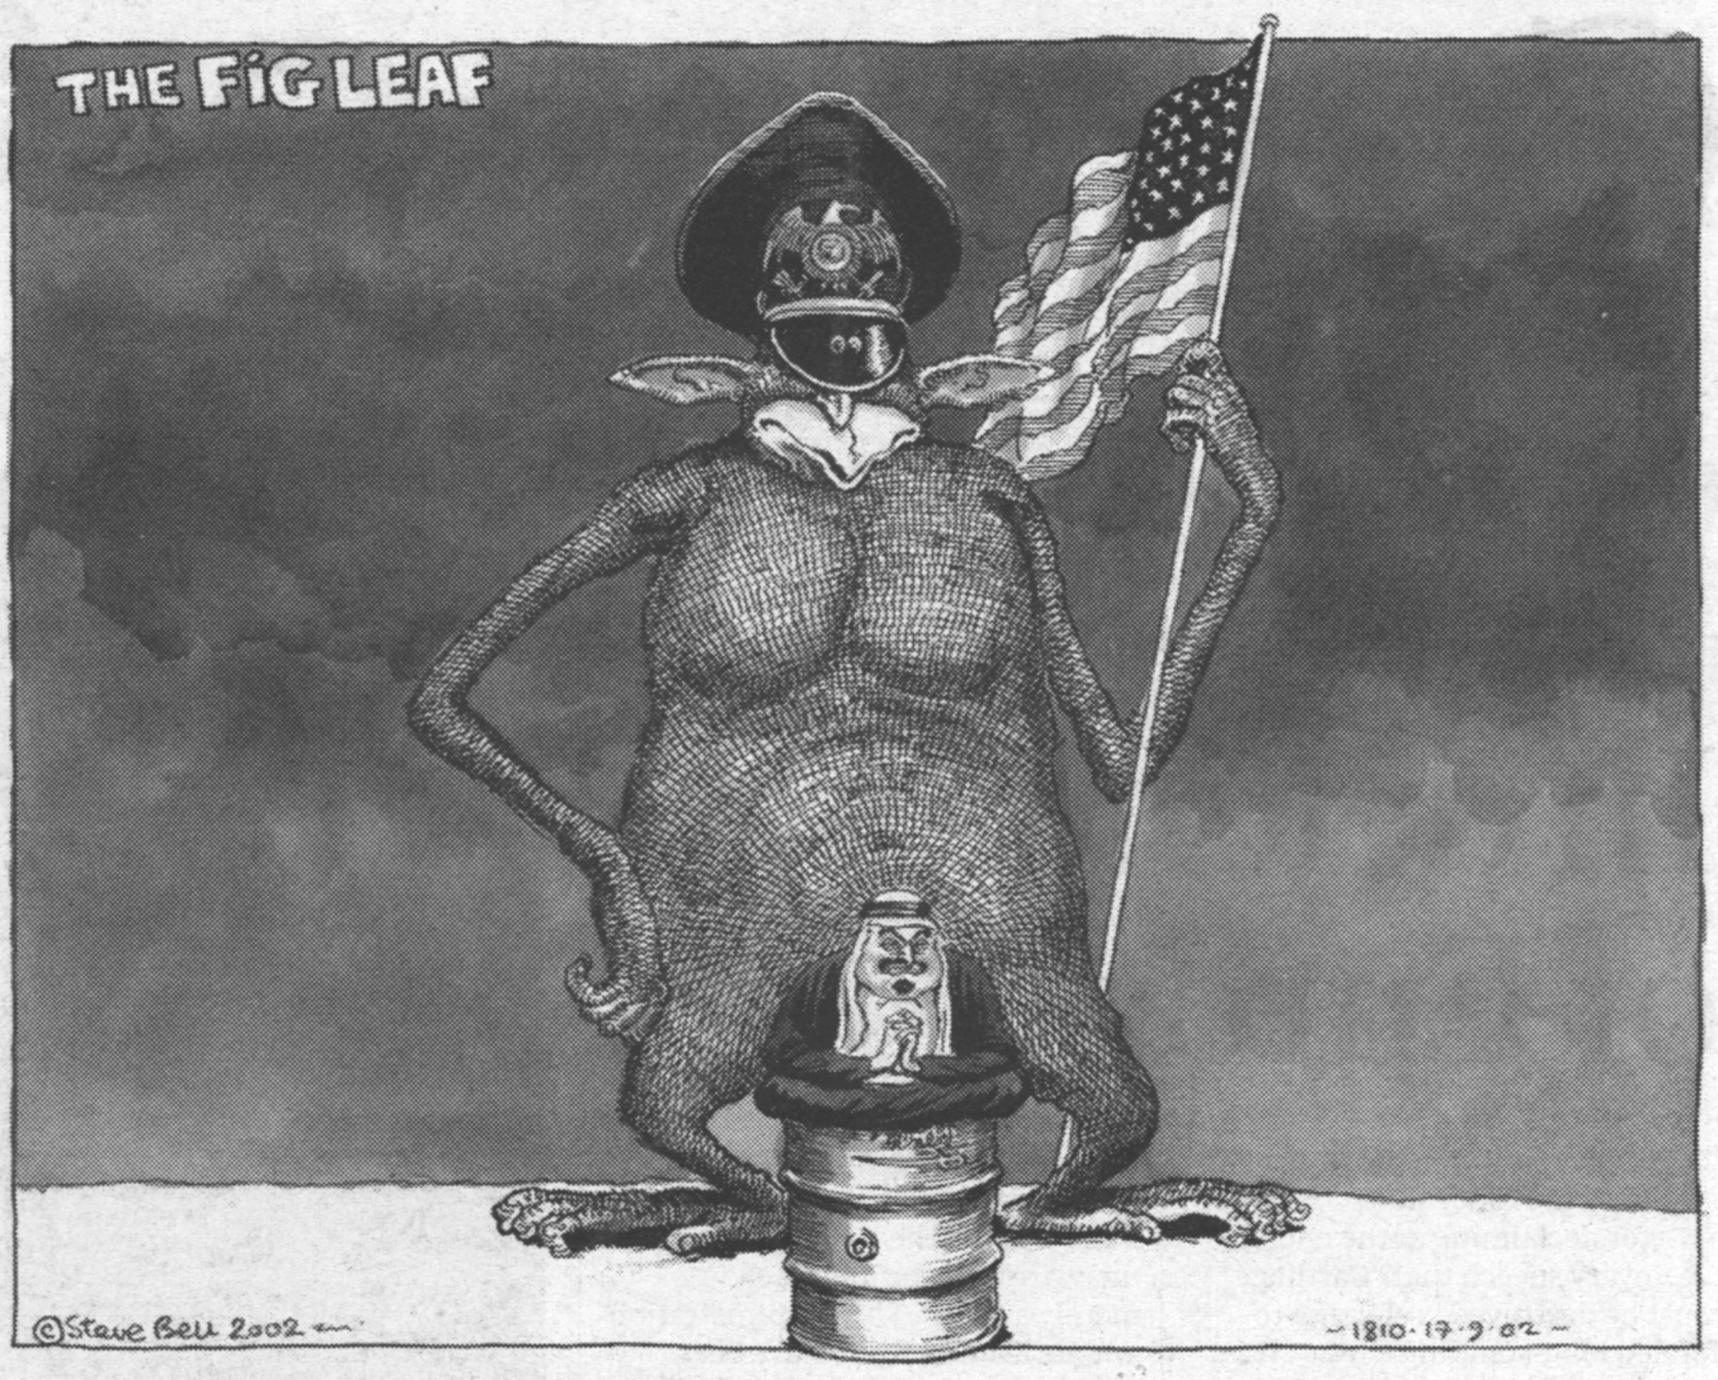 Steve Bell Cartoon "The Fig Leaf"